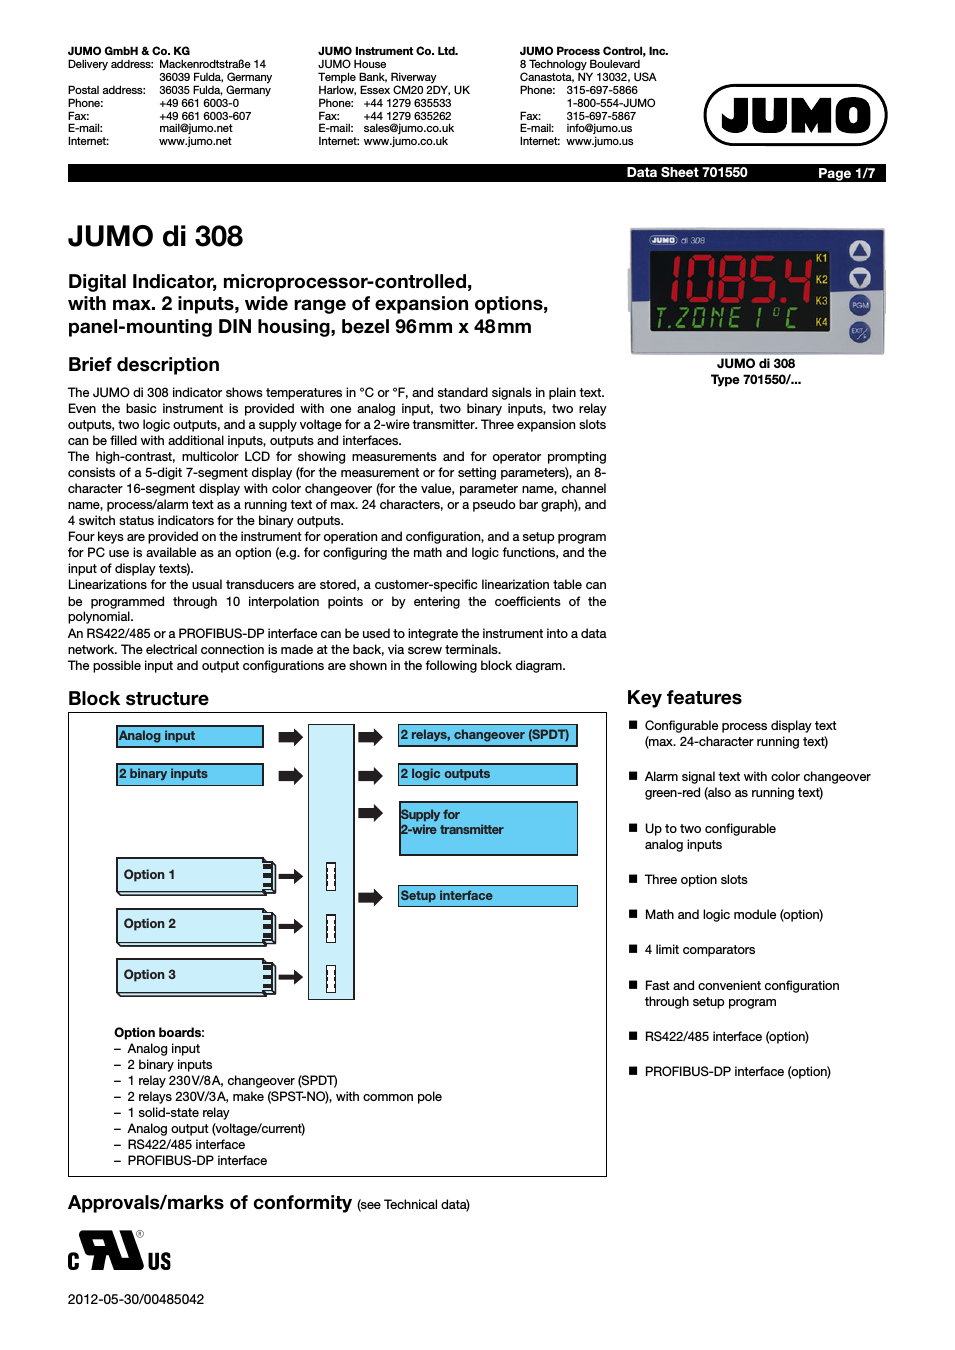 701550 di 308 - Digital Indicator Data Sheet